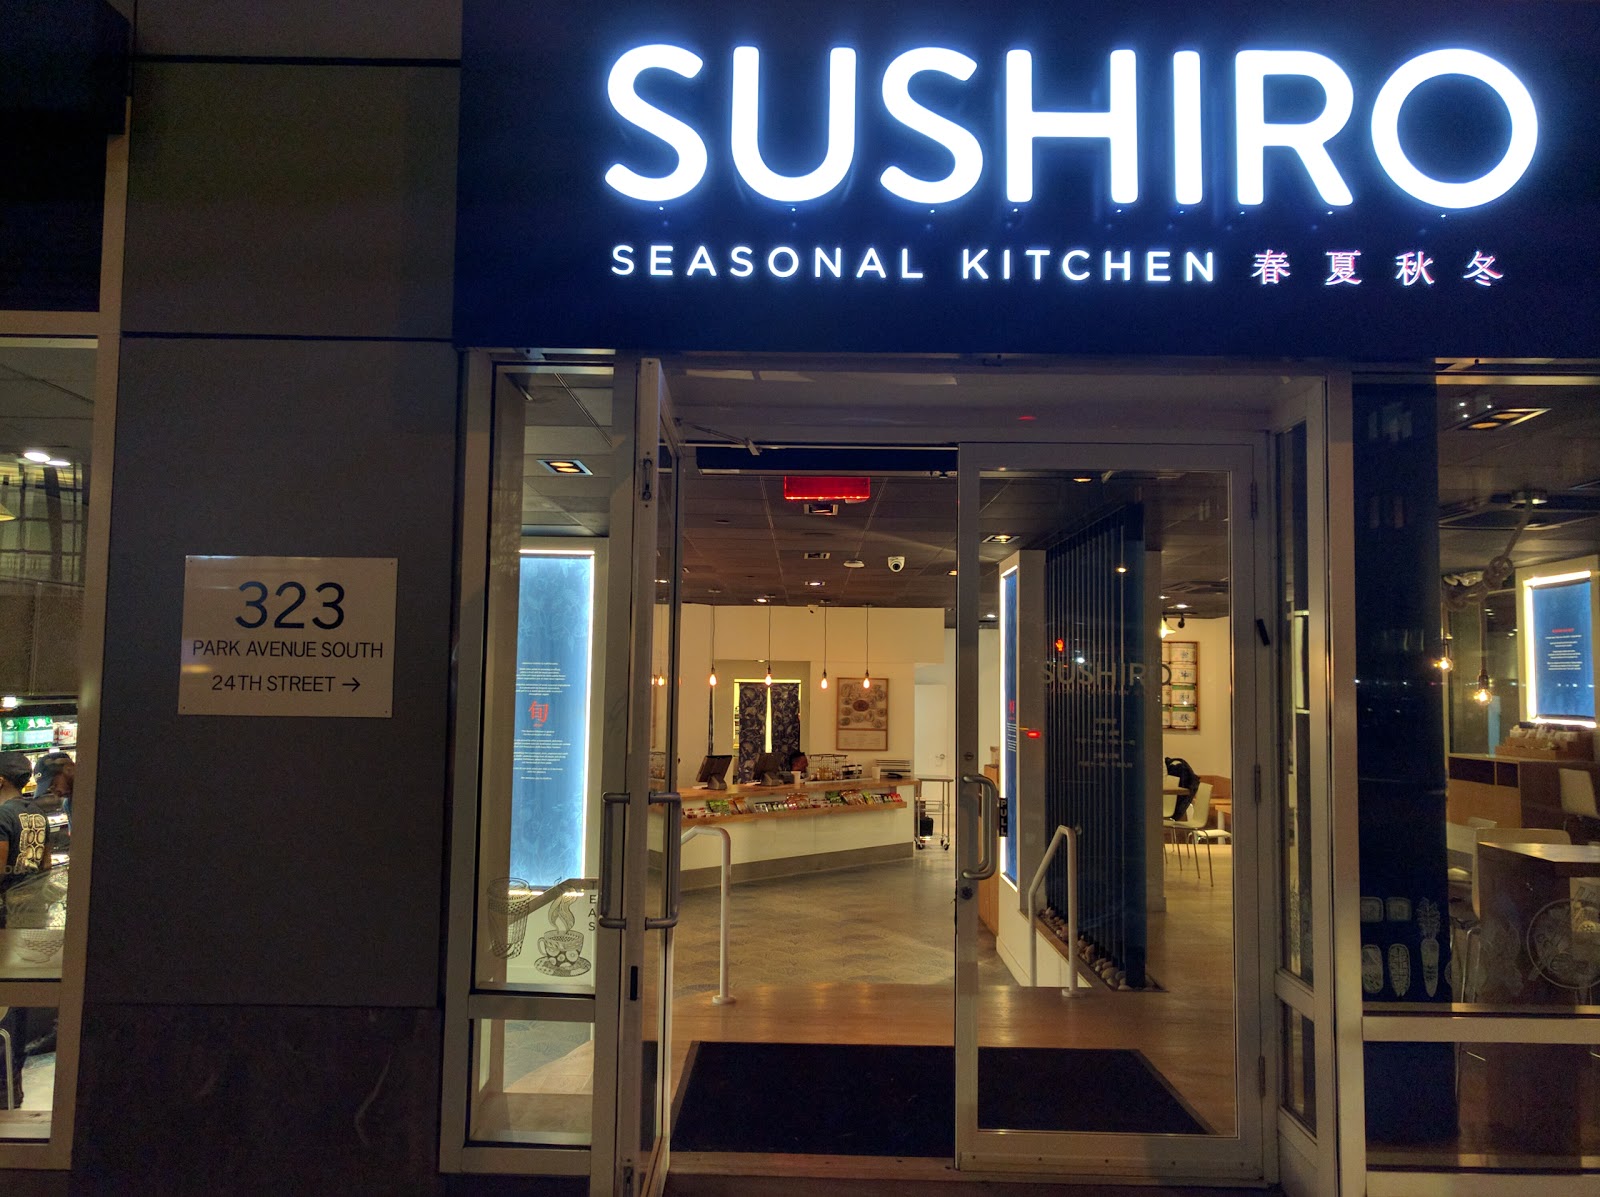 Photo of Sushiro Seasonal Kitchen in New York City, New York, United States - 6 Picture of Restaurant, Food, Point of interest, Establishment